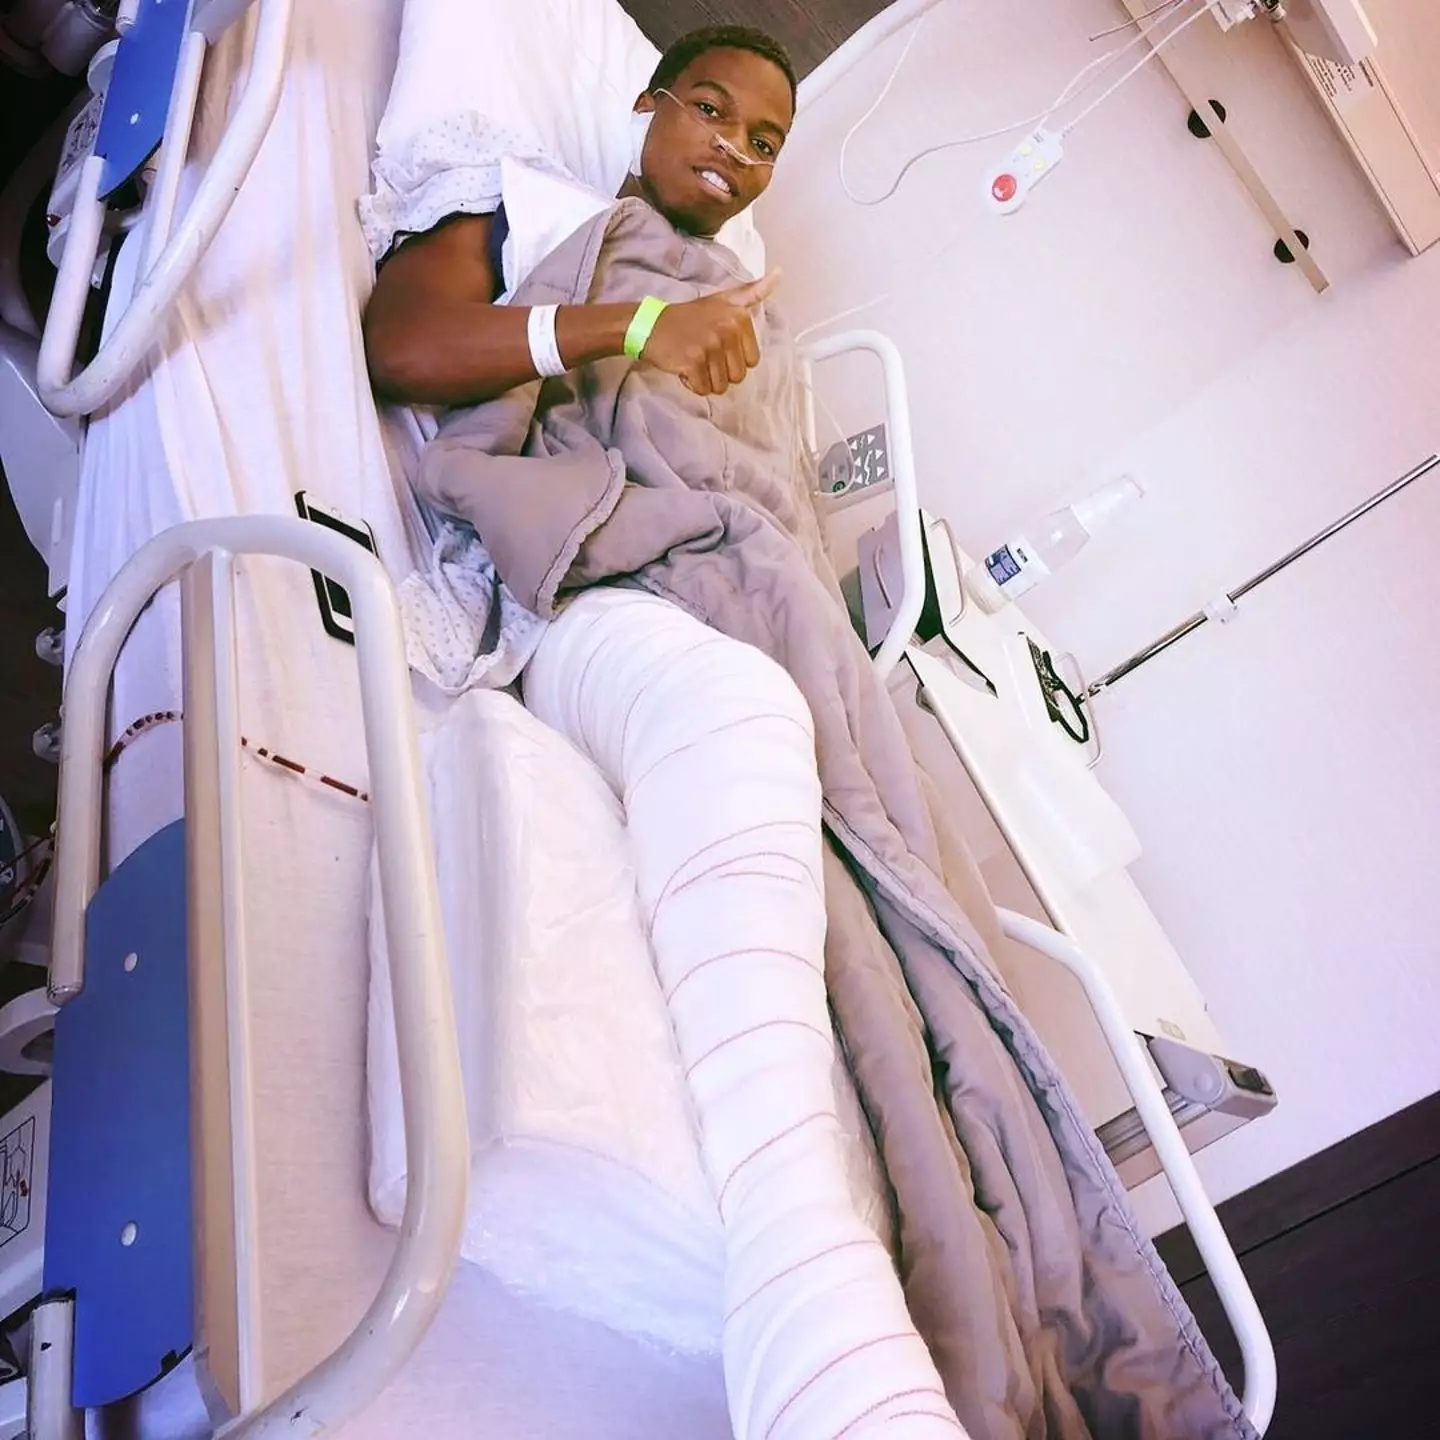 Musonda after having surgery on his knee. Image credit: Instagram/musonda